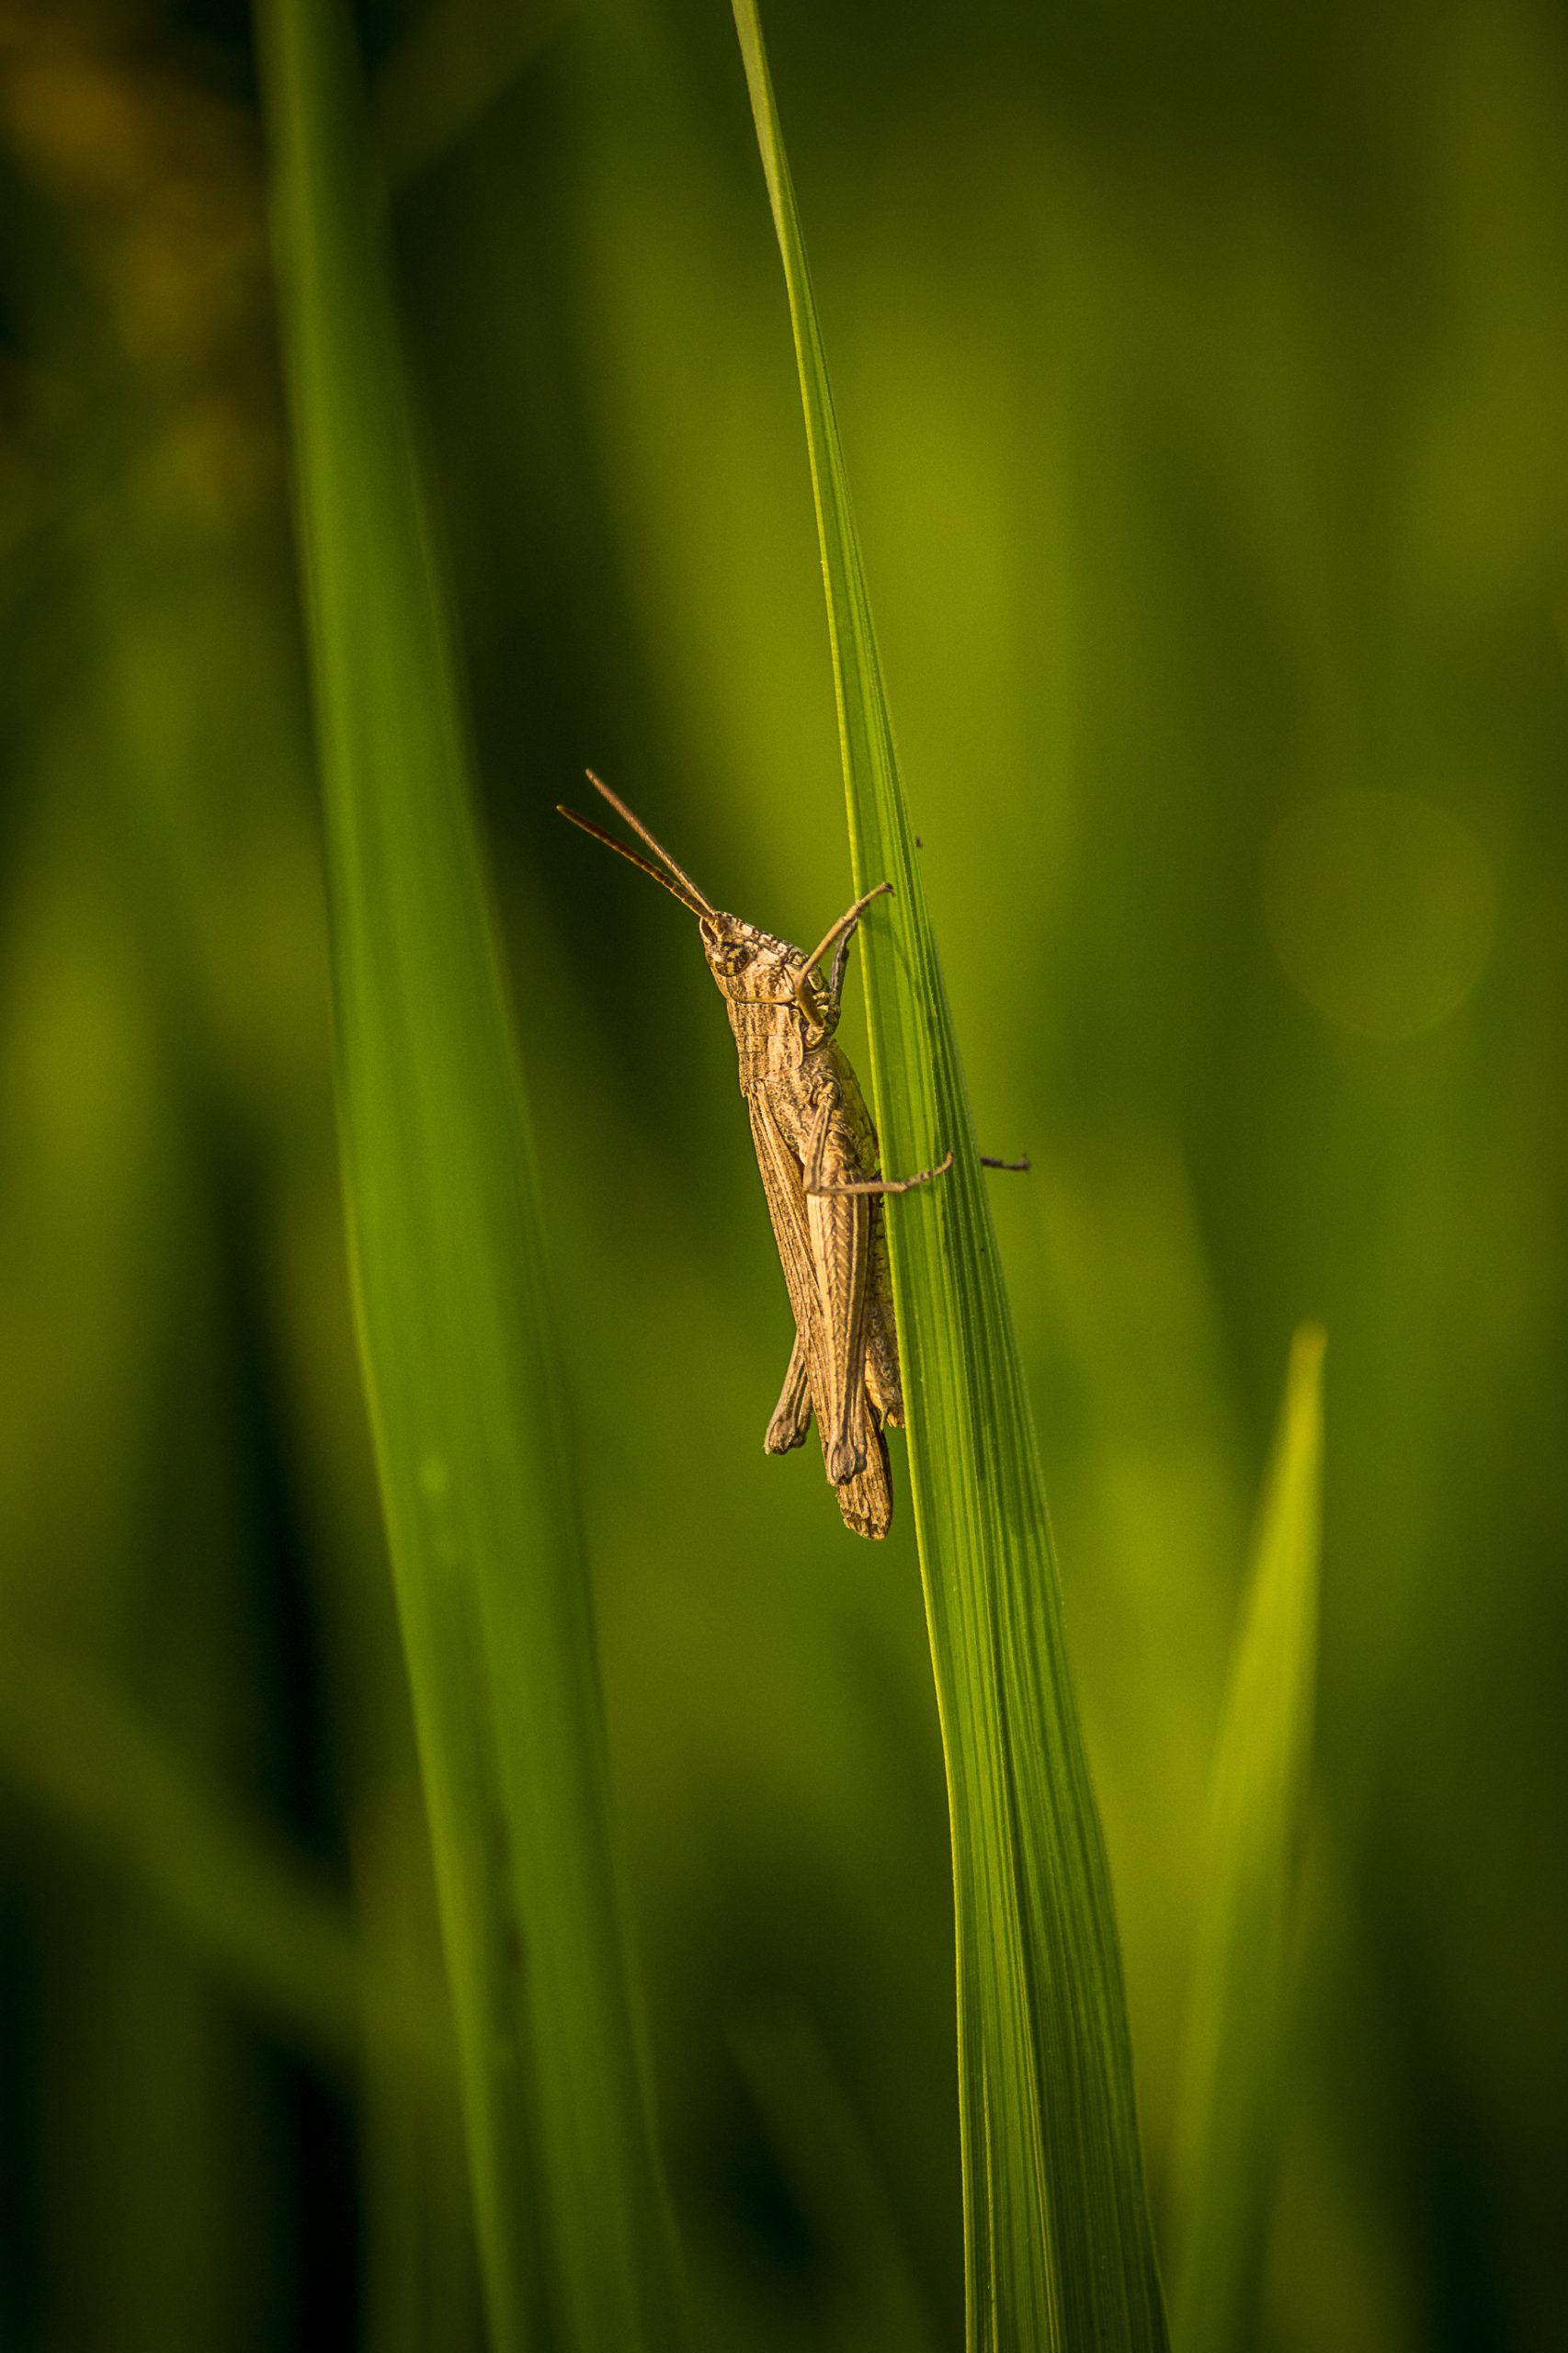 A Grasshopper on a grass leaf